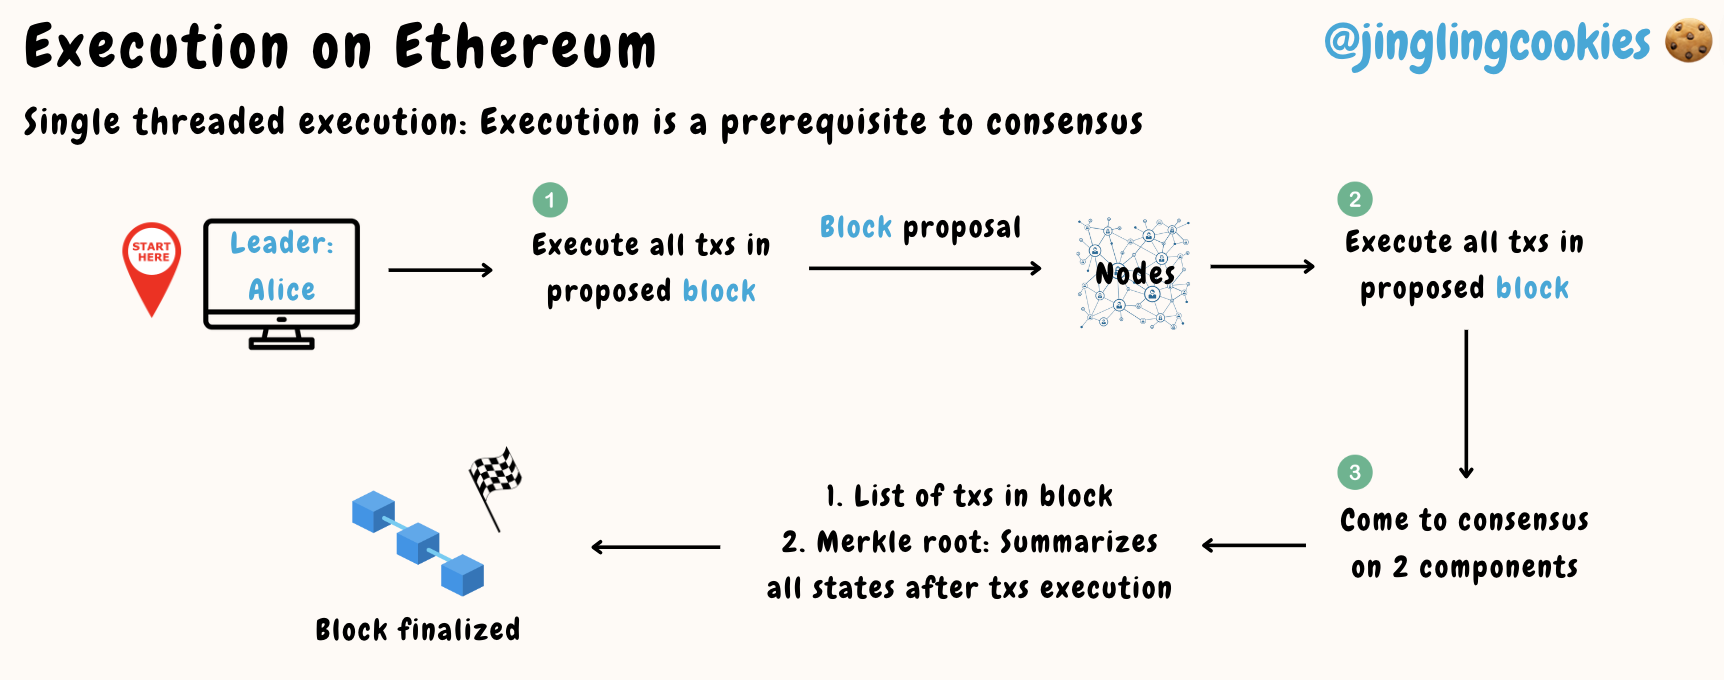 Execution on Ethereum